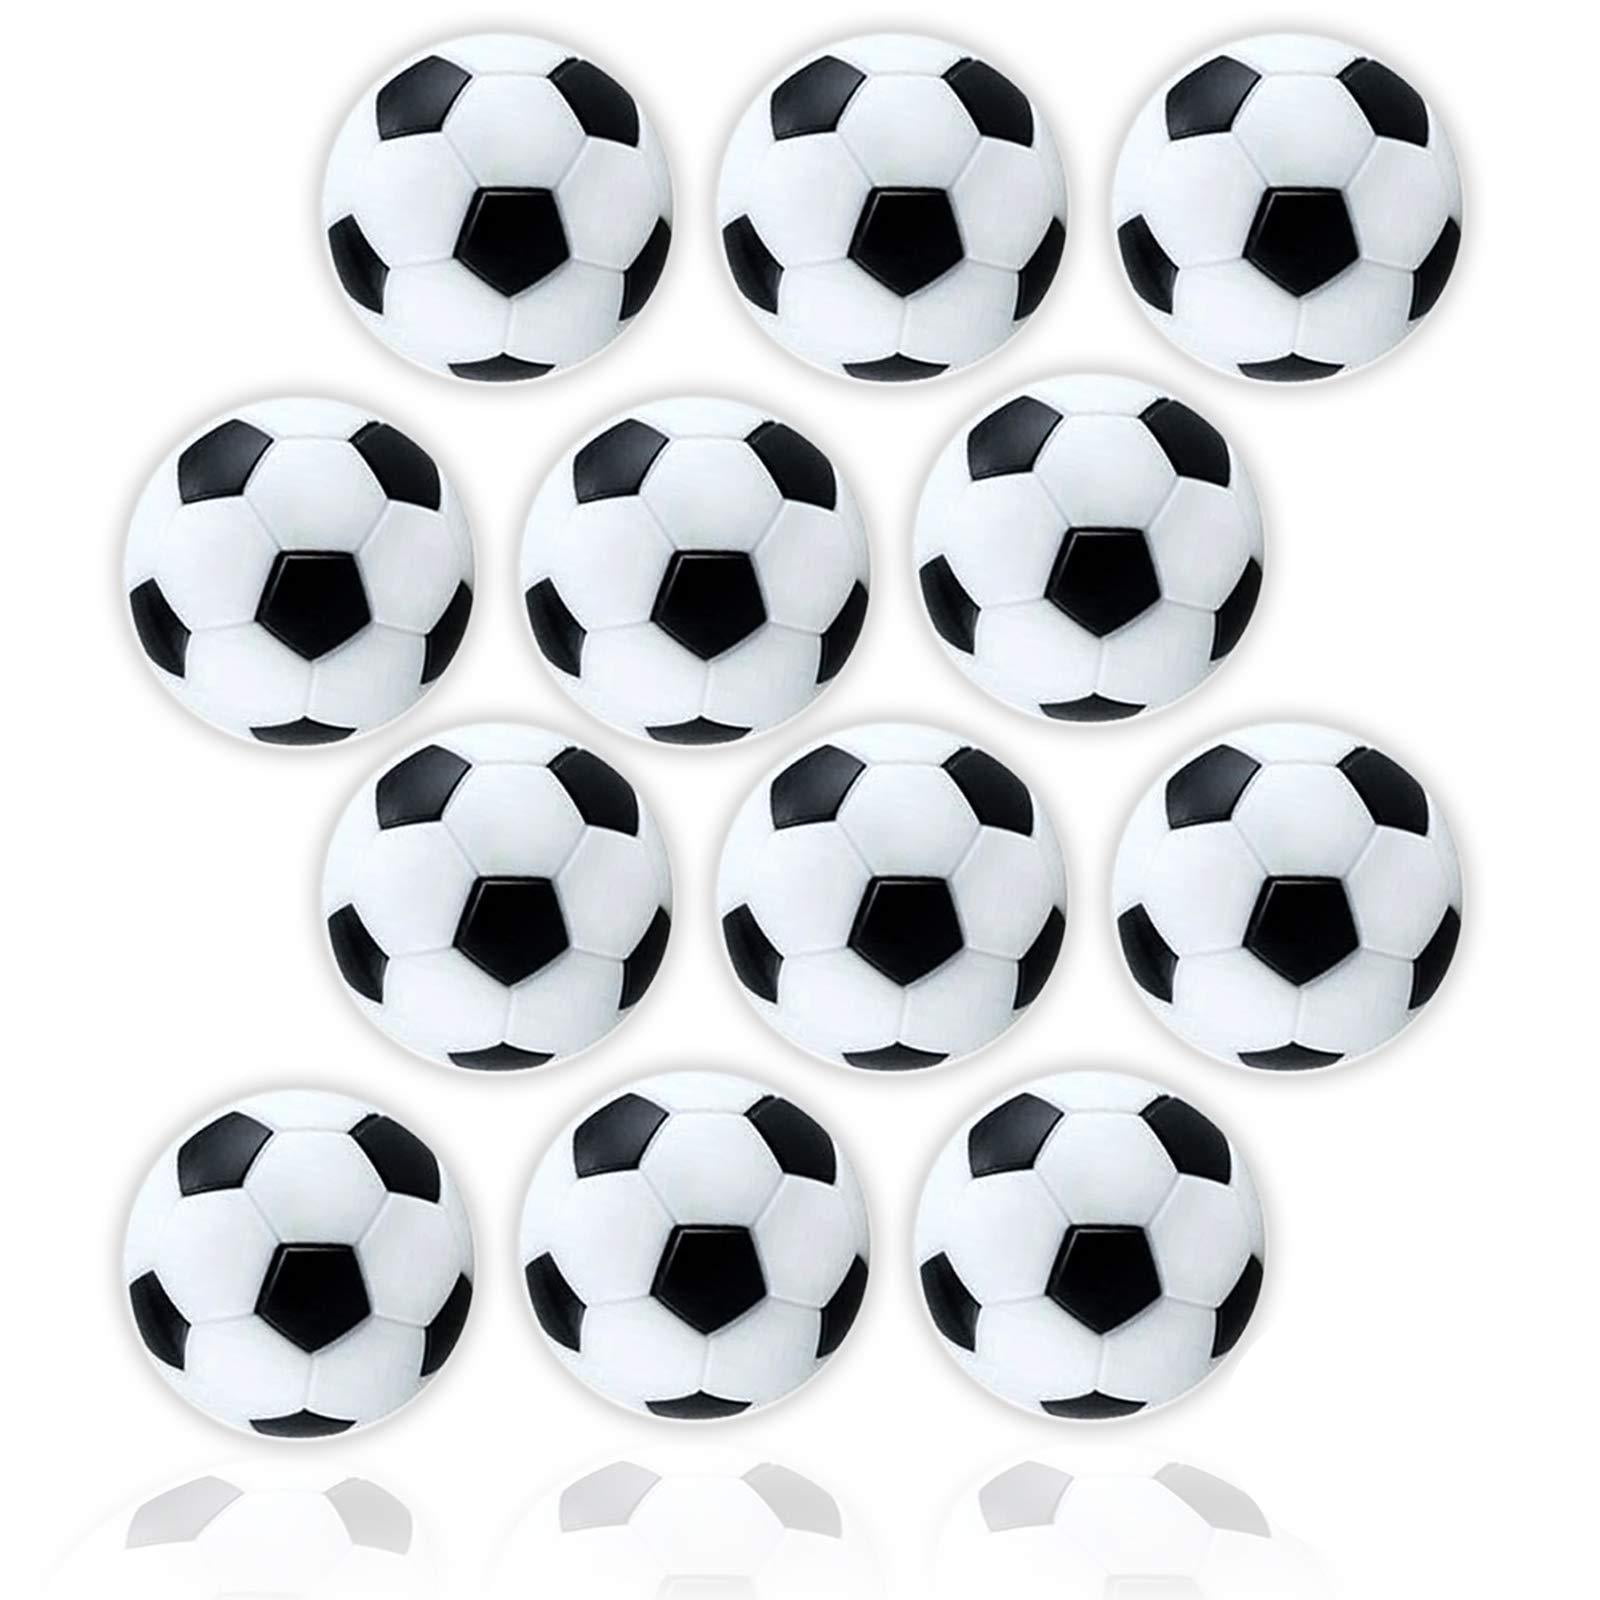 12PCS Foosball Table Football Soccer Ball For Entertainment Indoor Game Kit 